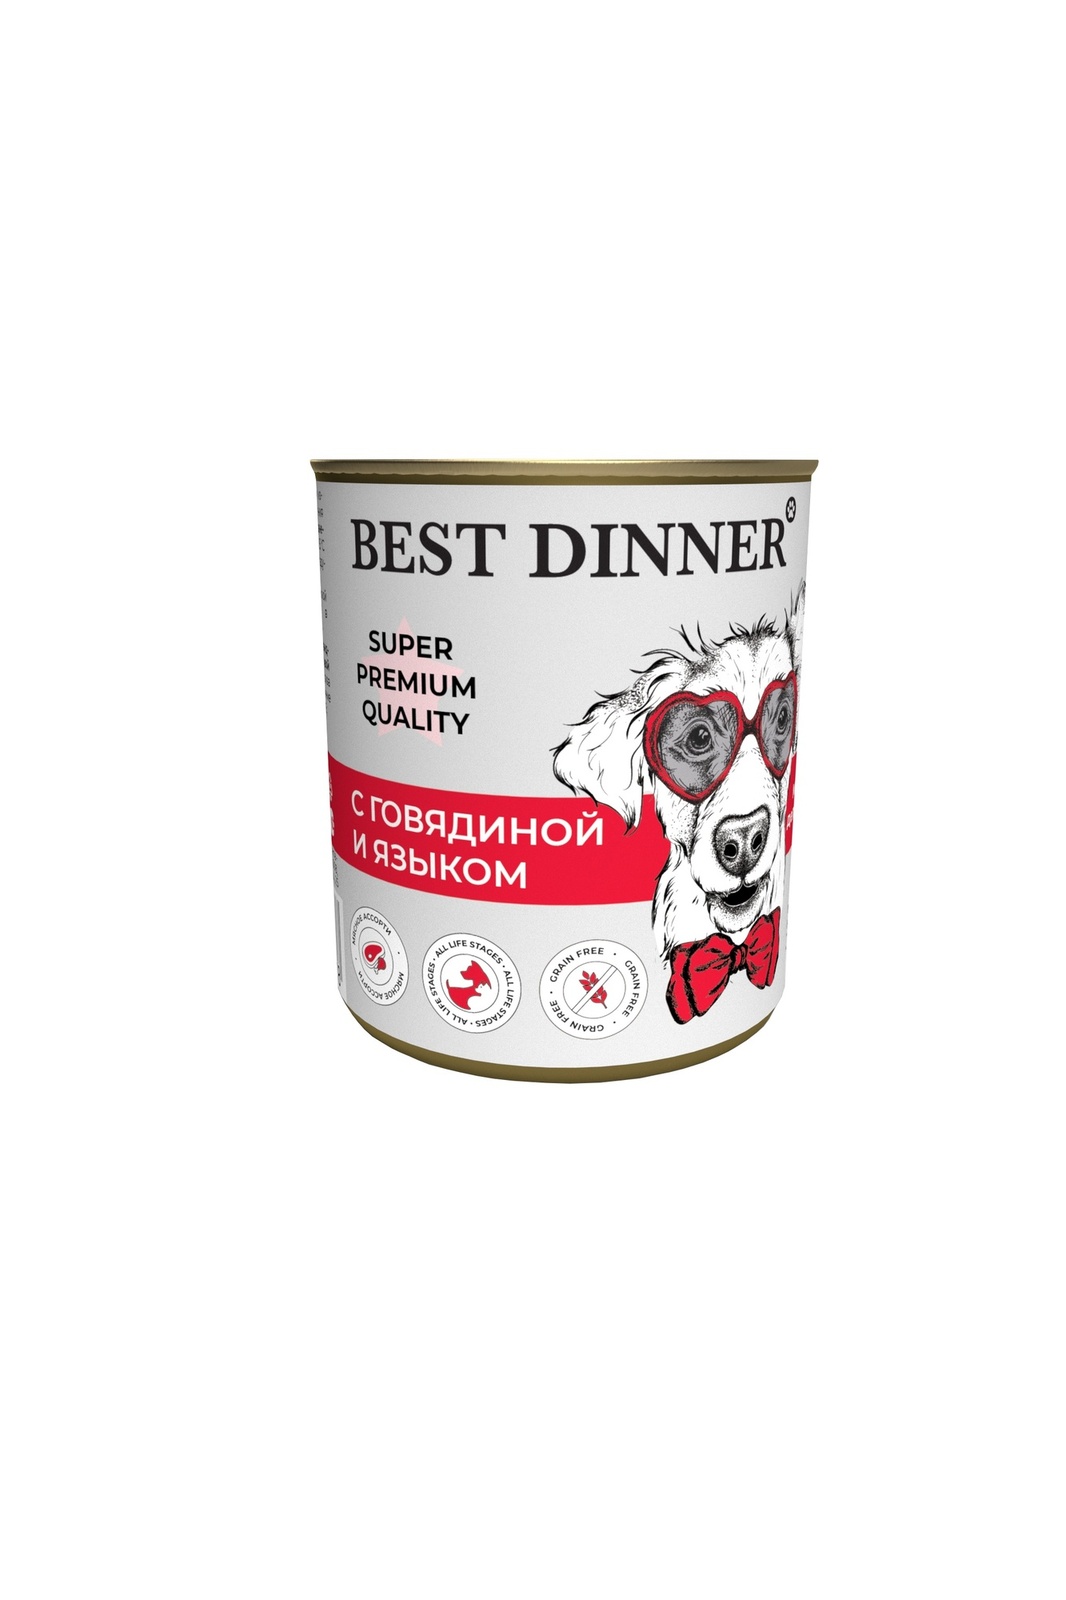 Best Dinner Best Dinner консервы для собак Super Premium С говядиной и языком (340 г)